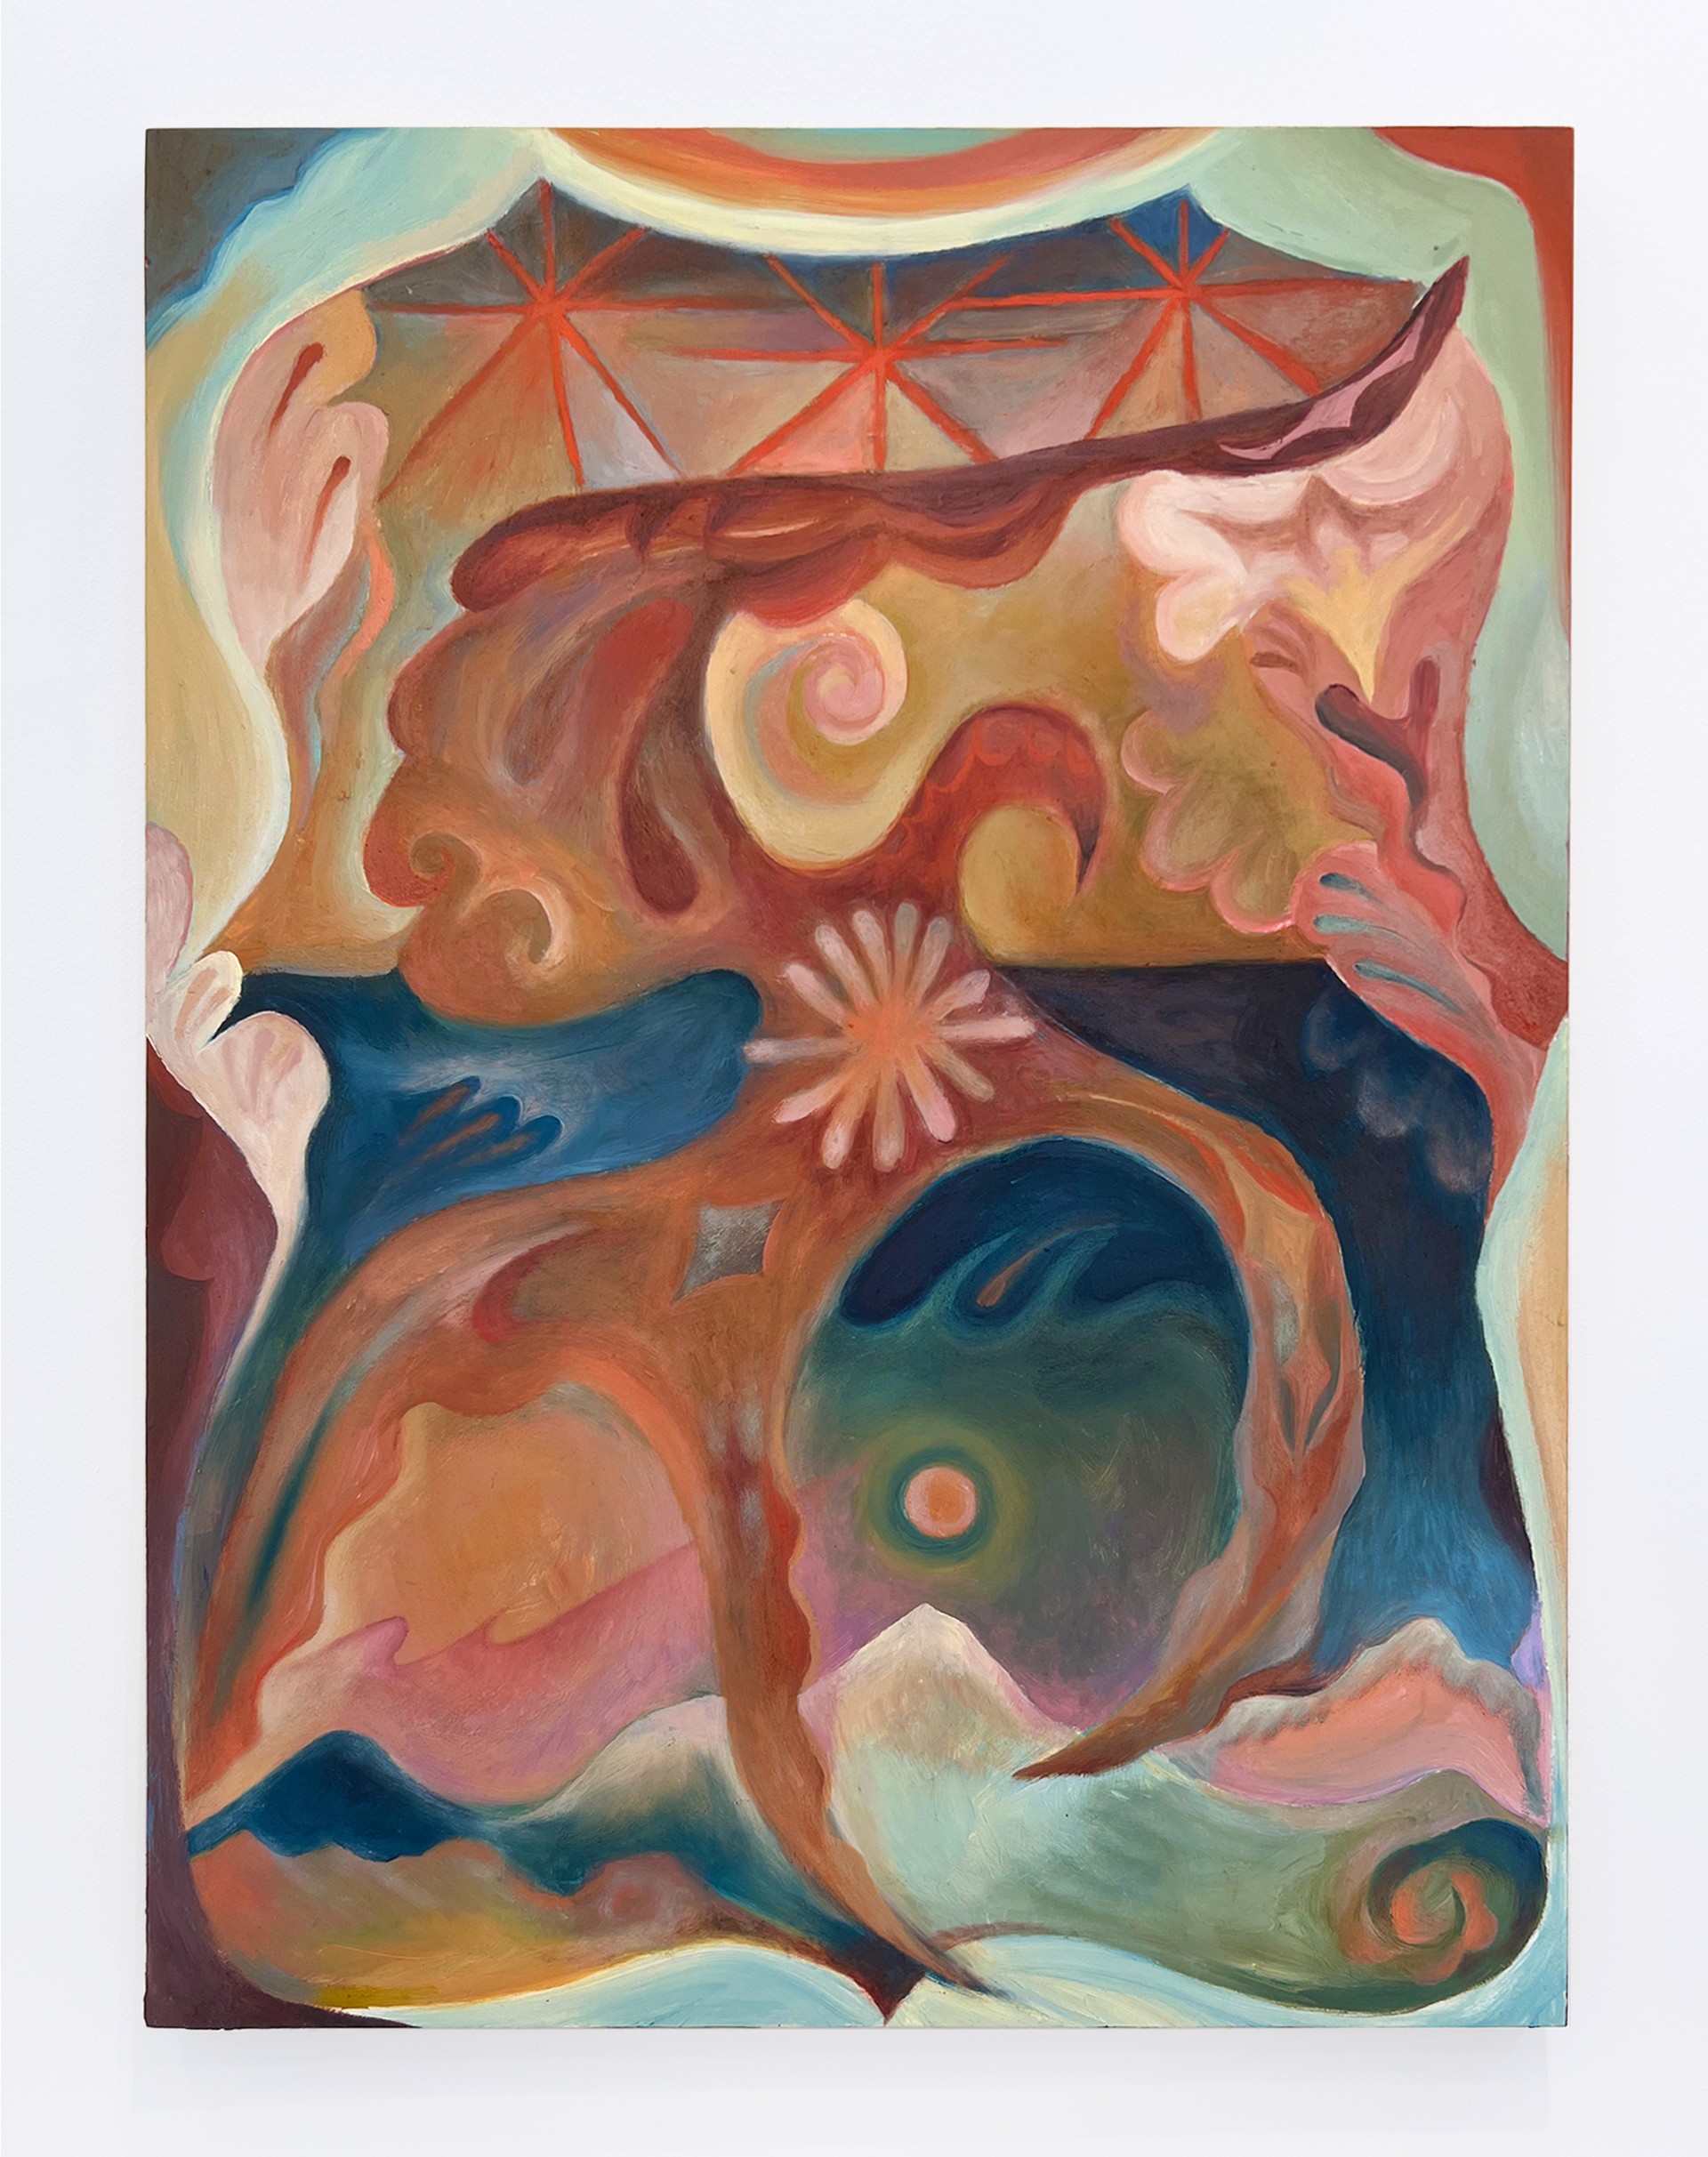 Ortiz Wind by Margaret R. Thompson